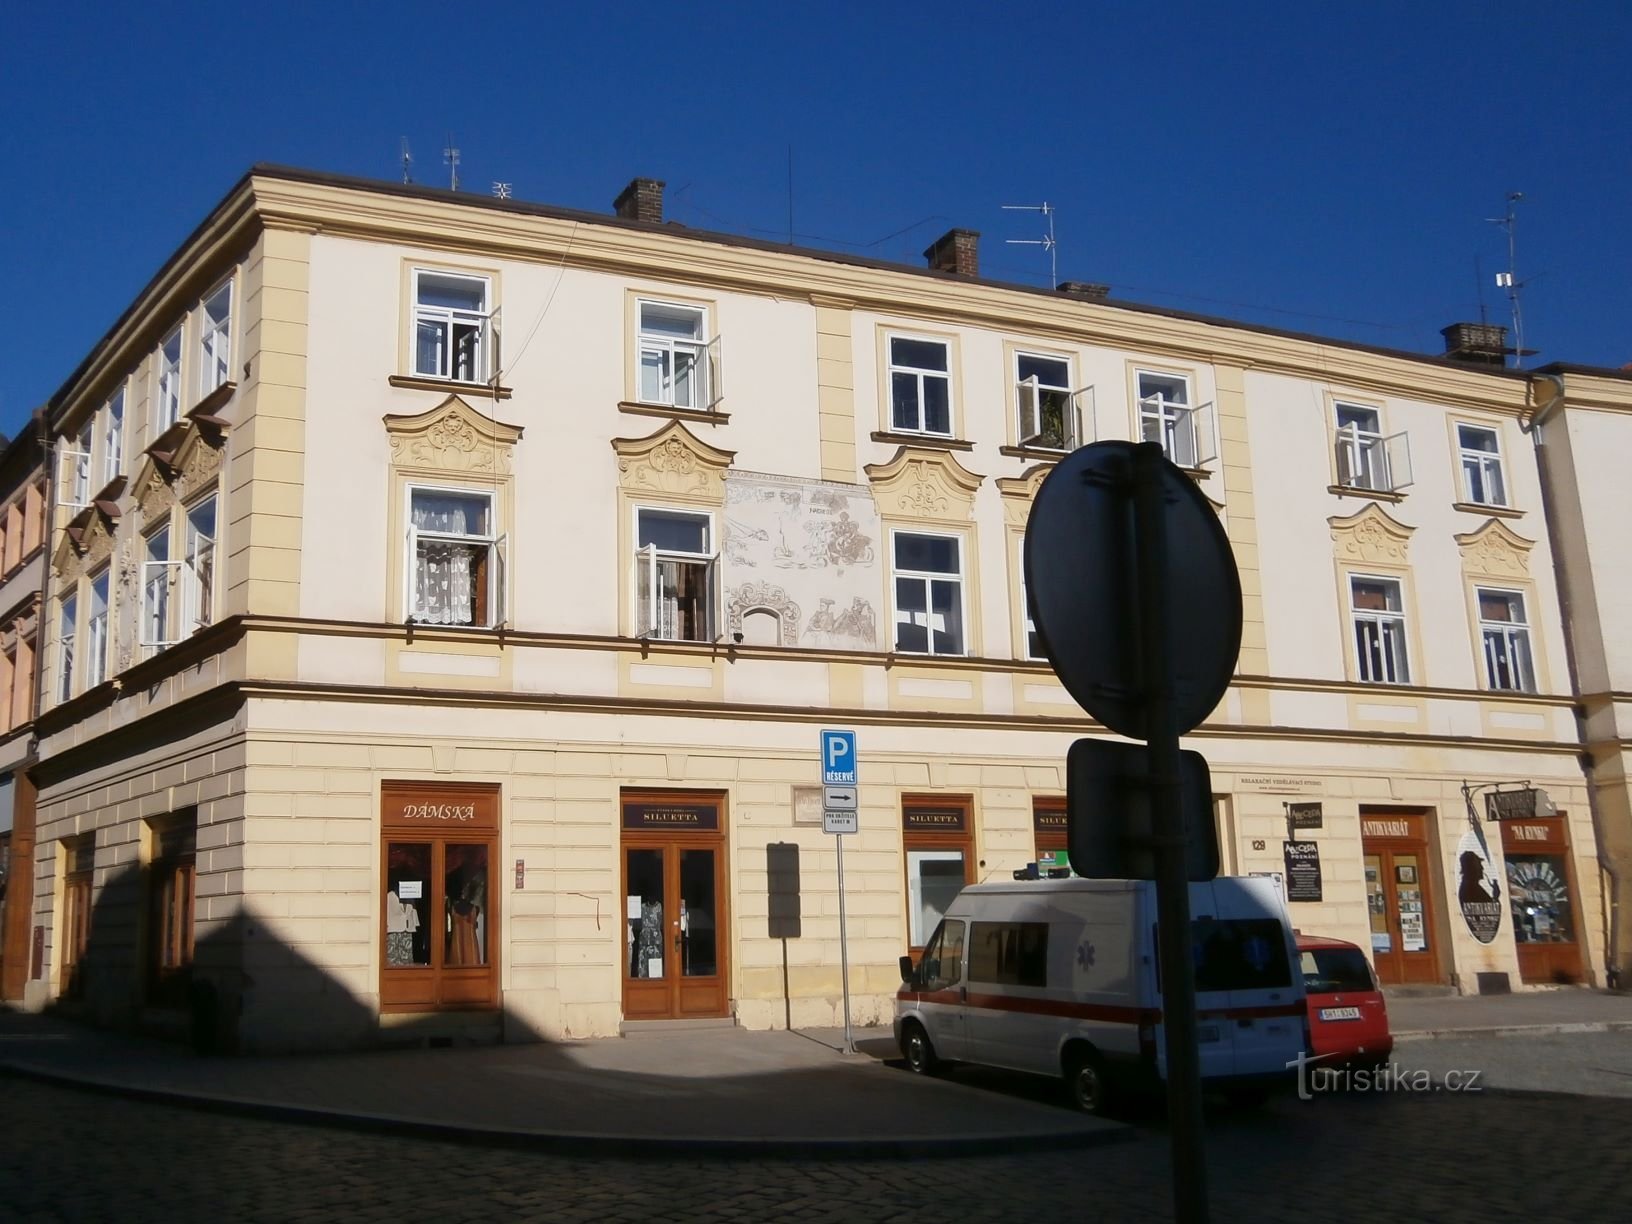 Malé náměstí no. 129 (Hradec Králové, 2.8.2013. április XNUMX.)